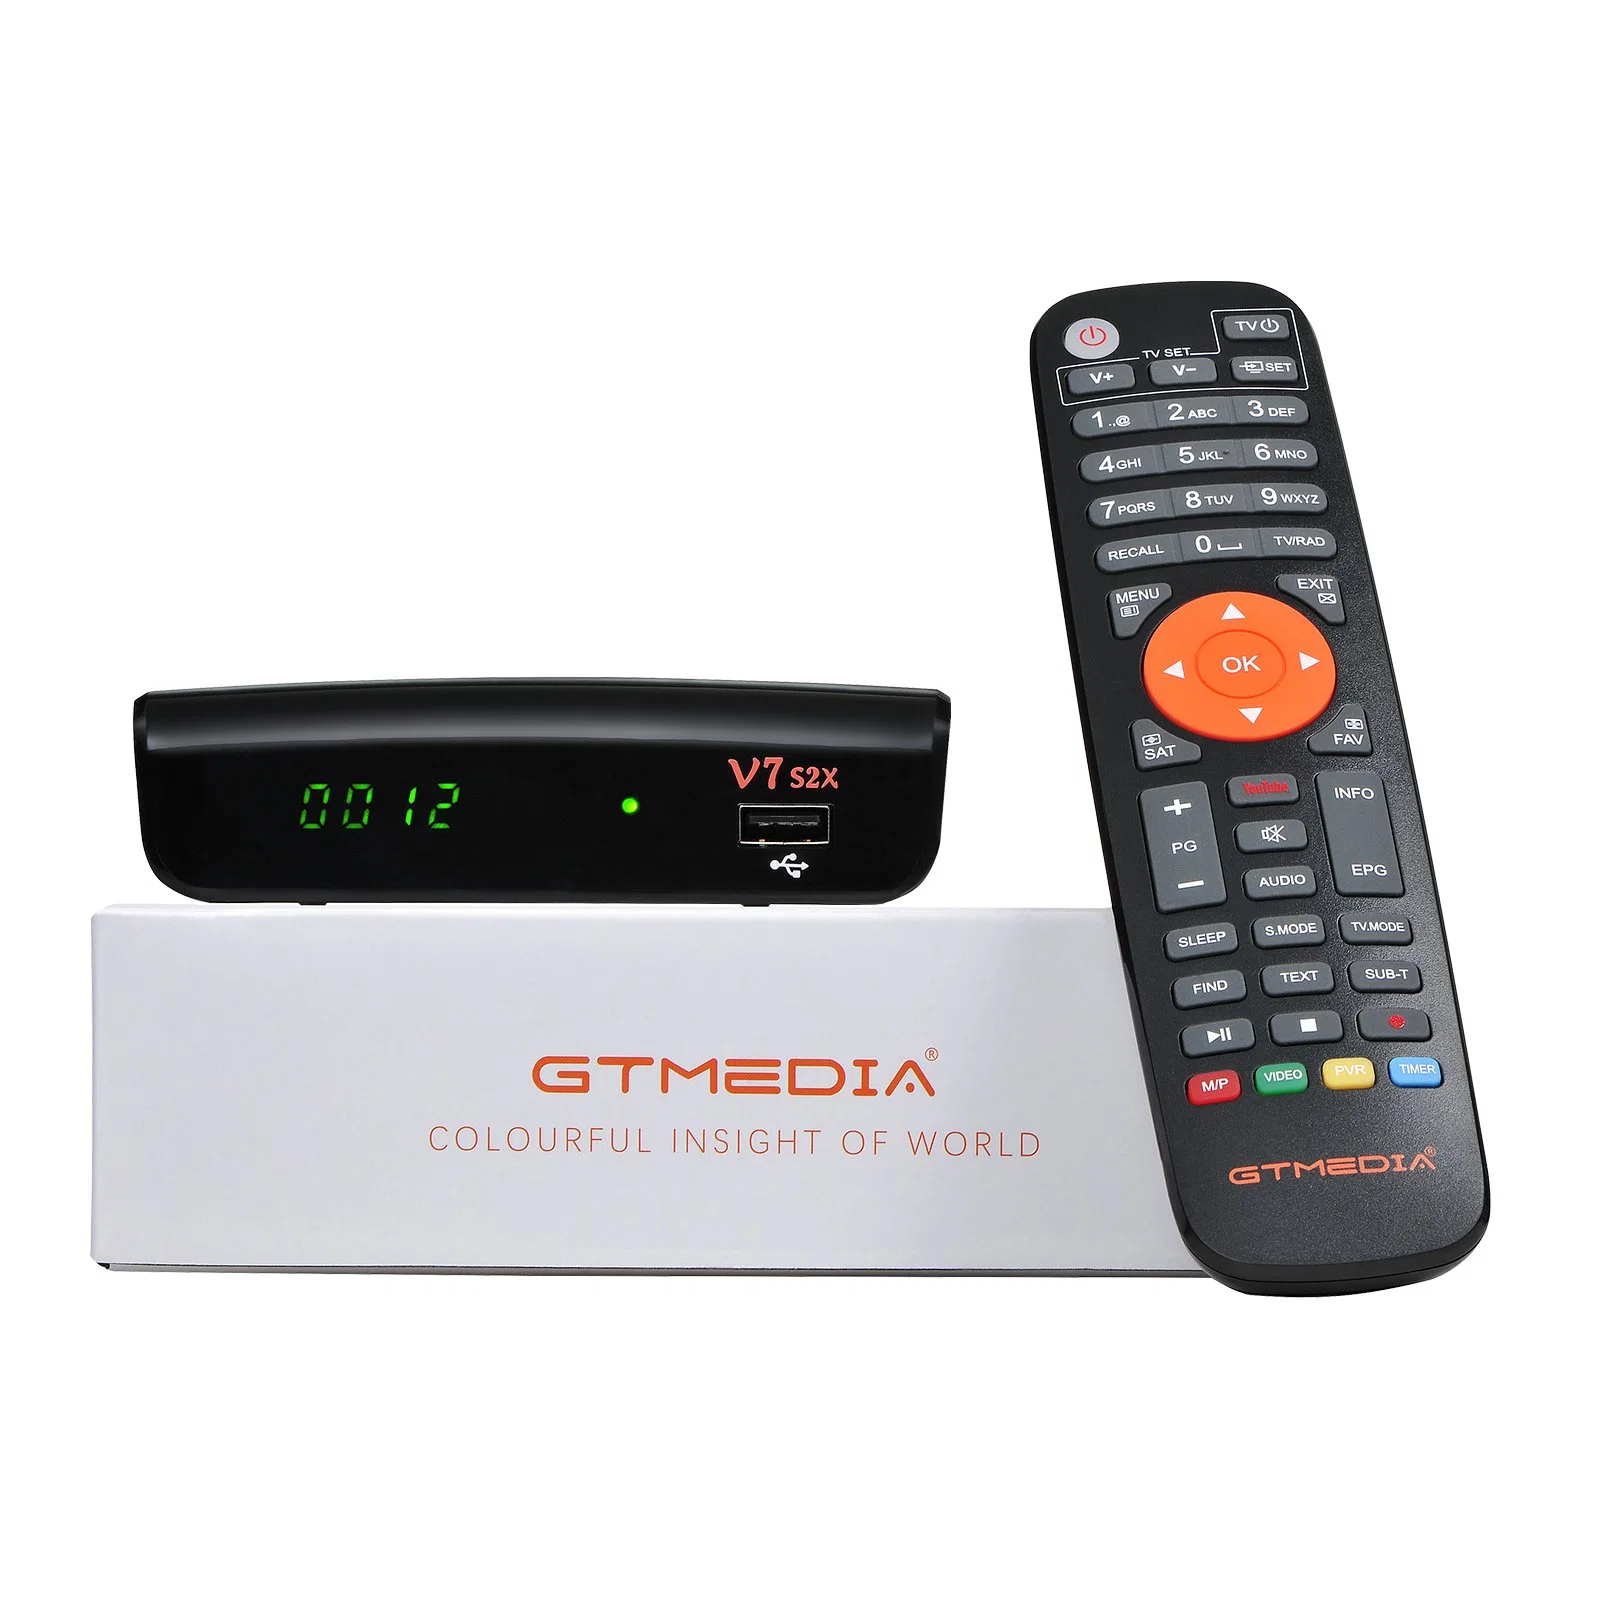 Gtmedia V7s2X DVB S2X USB WiFi Dongle Satellite Receiver HD Set Top Box